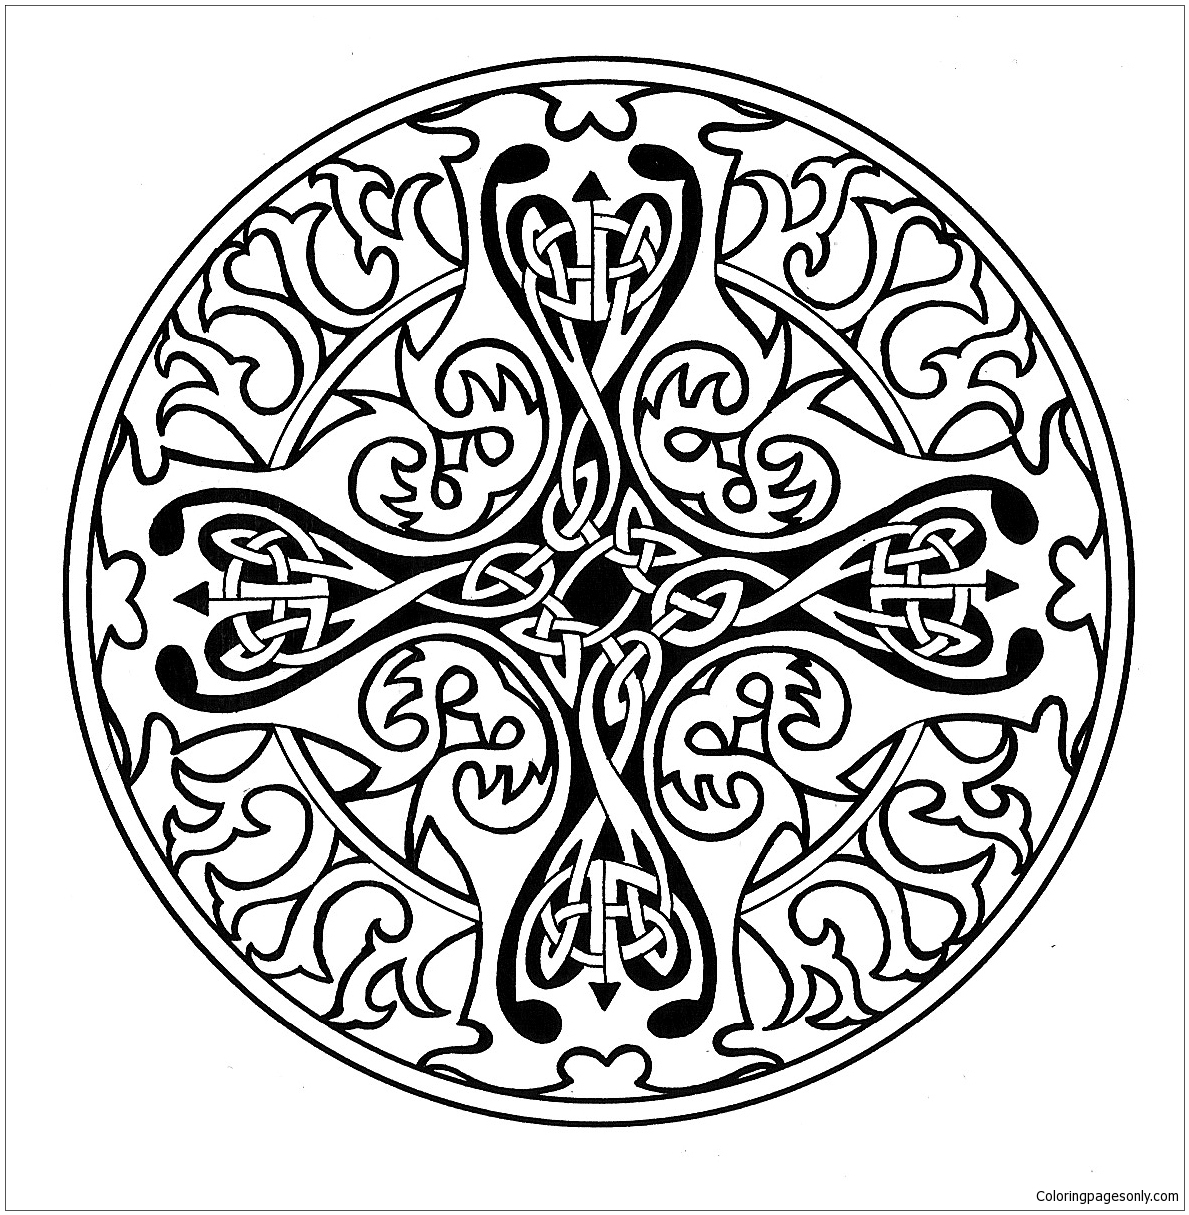 Keltisches Kreuz aus Mandala